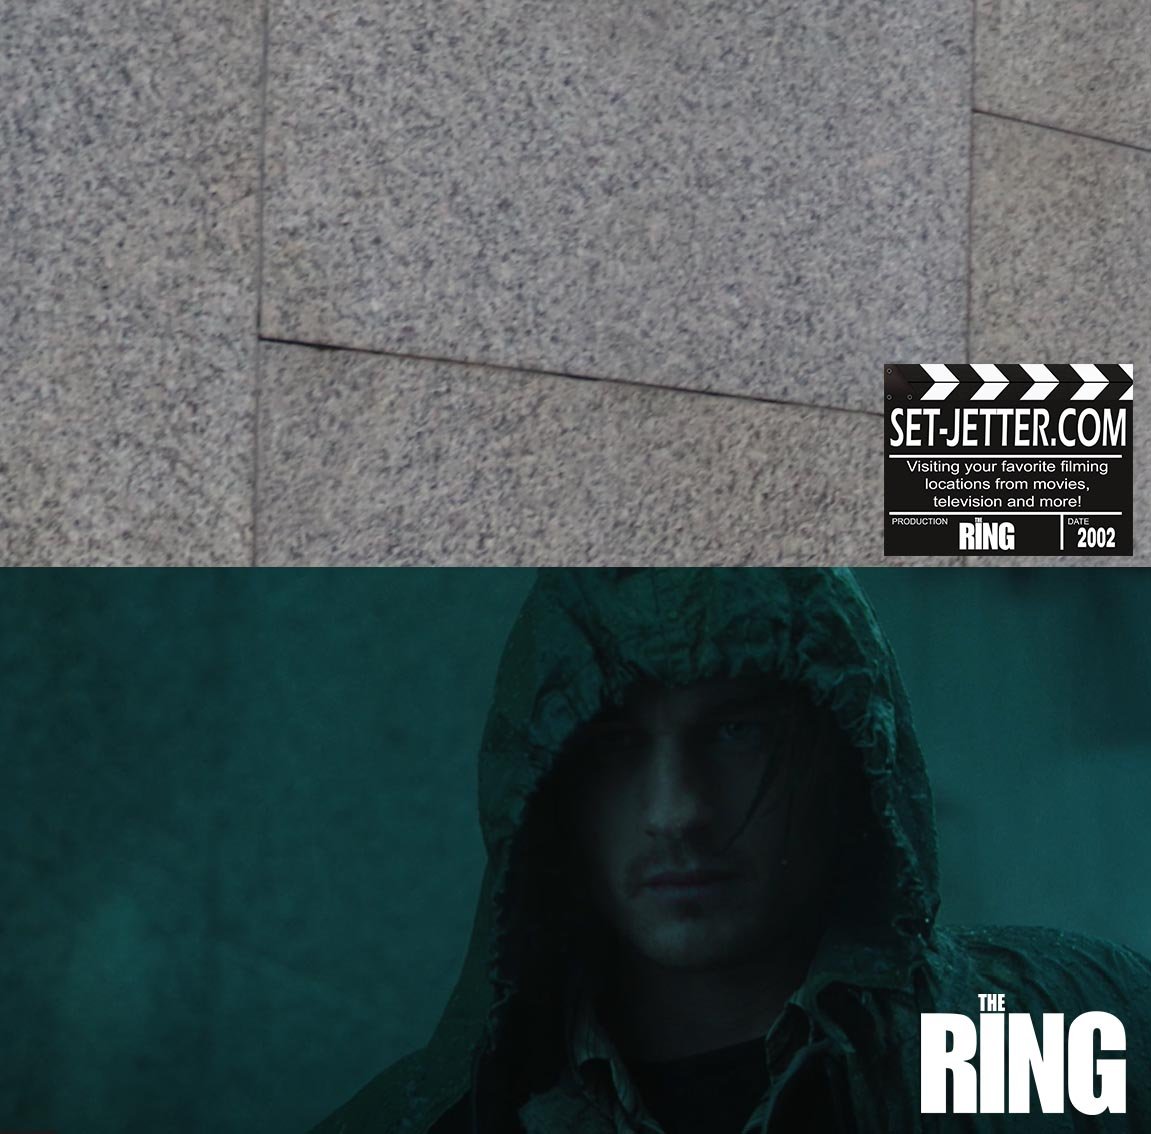 The Ring (20).jpg